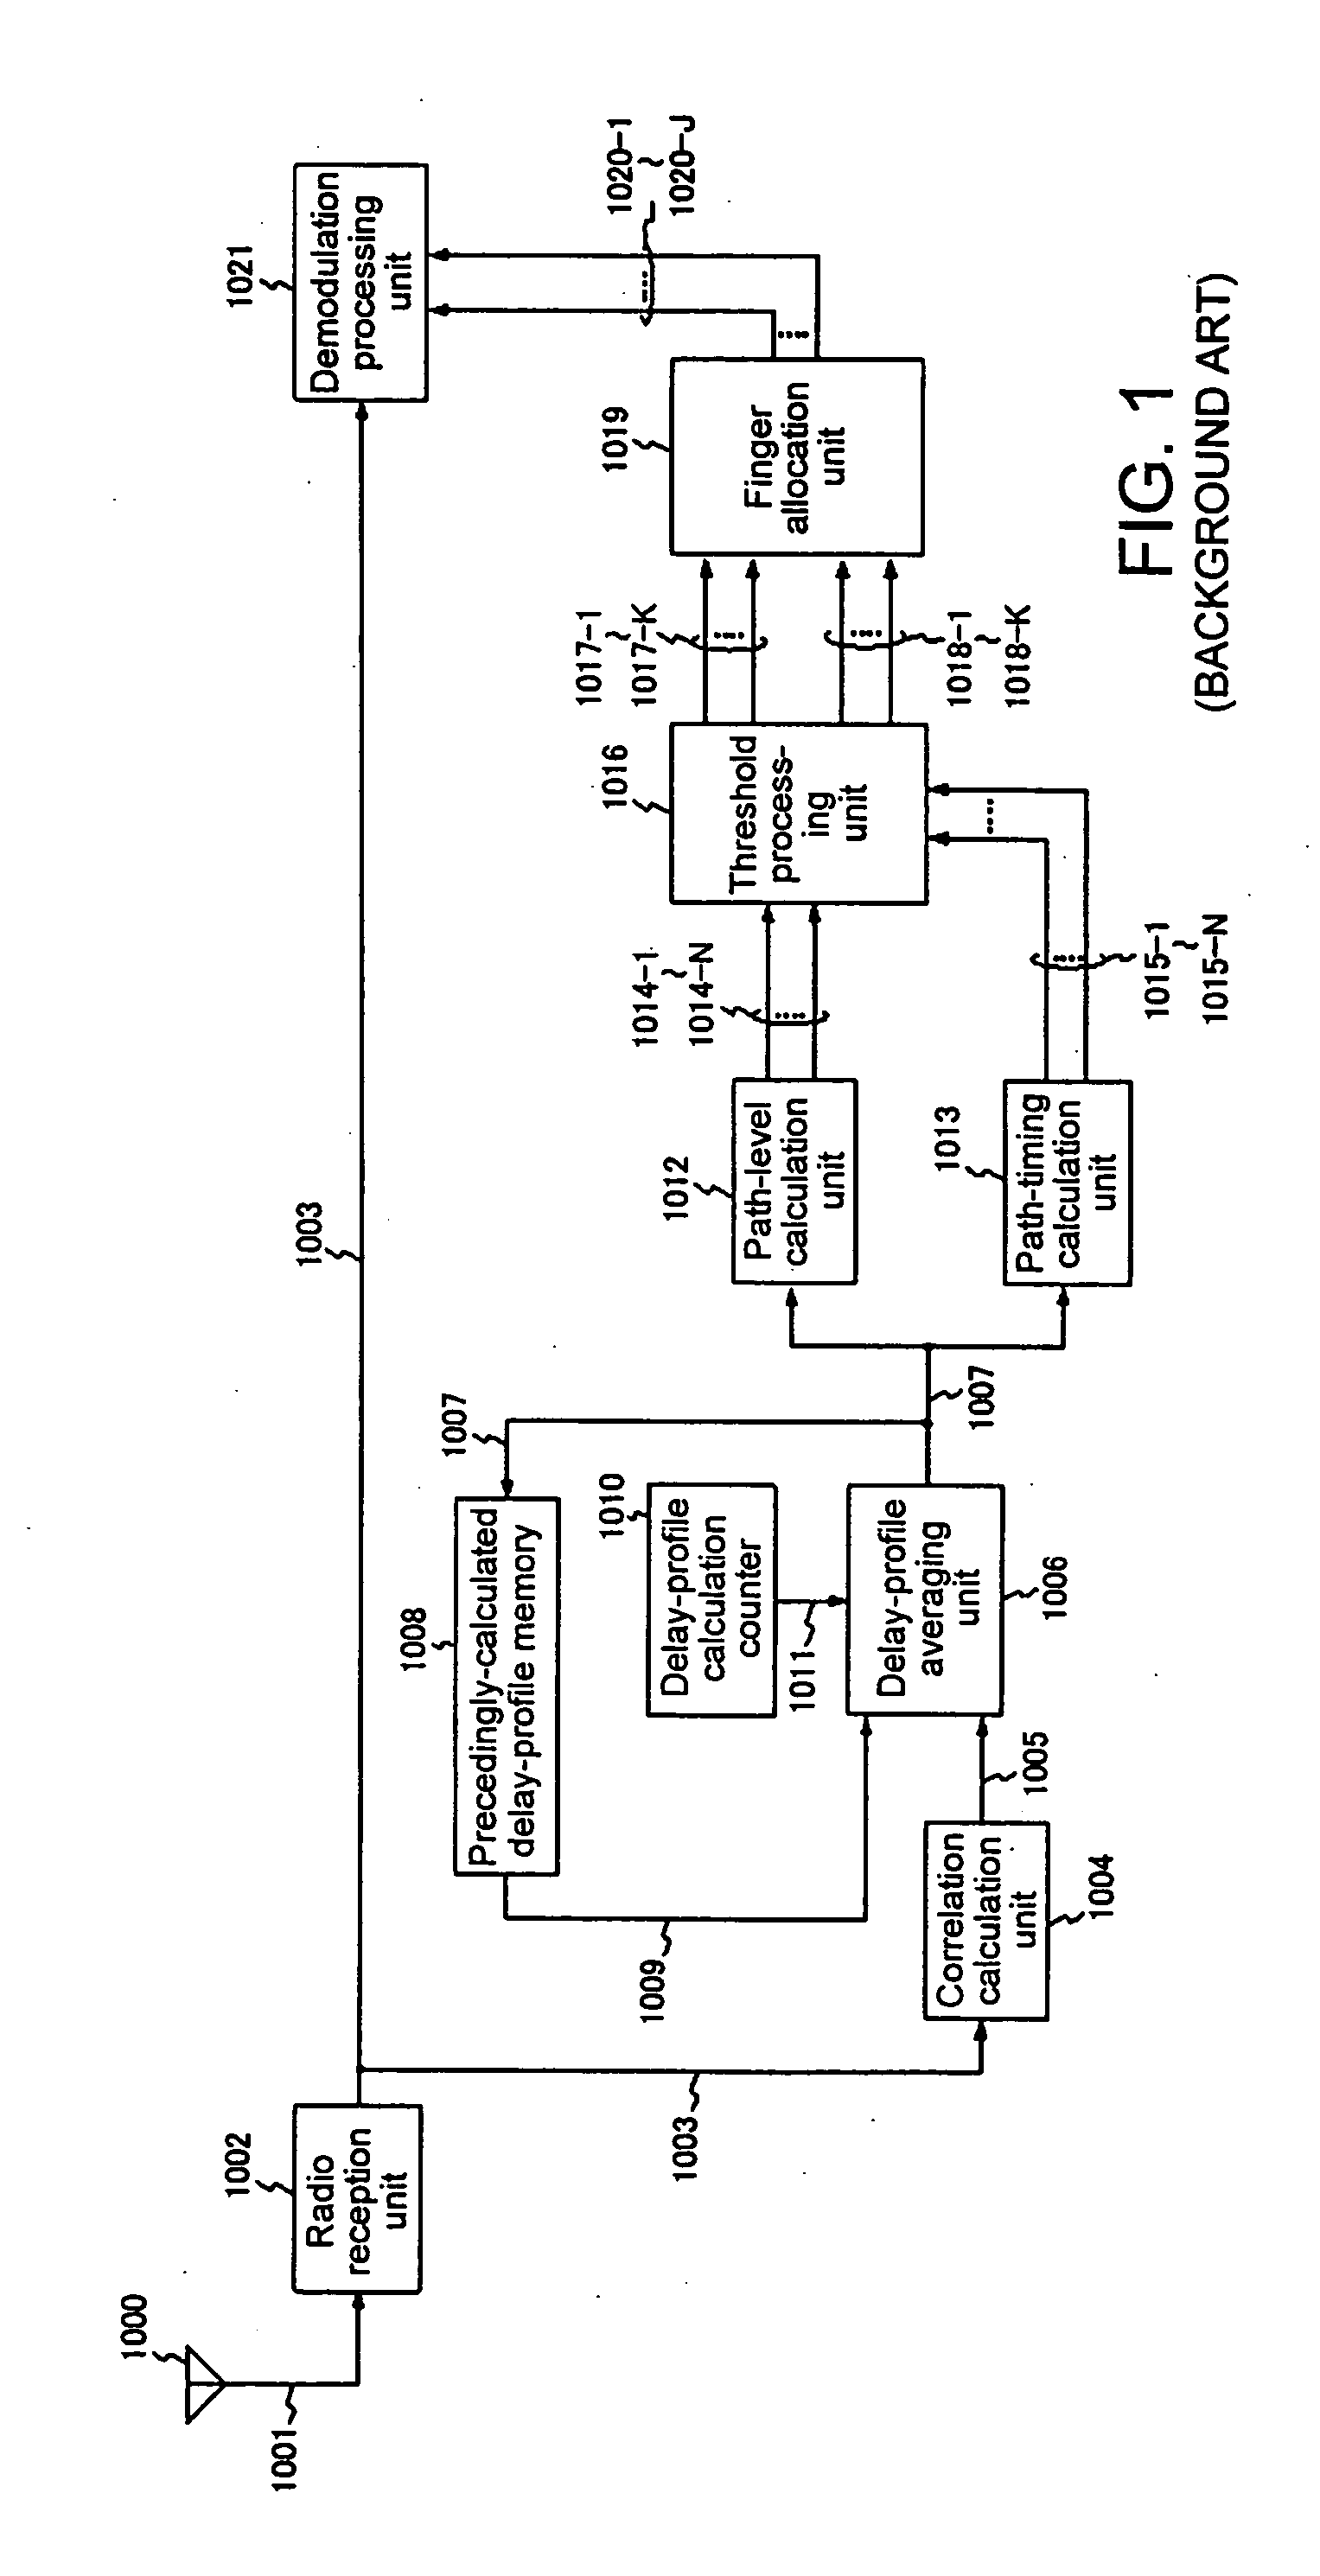 Method and apparatus for CDMA signal reception